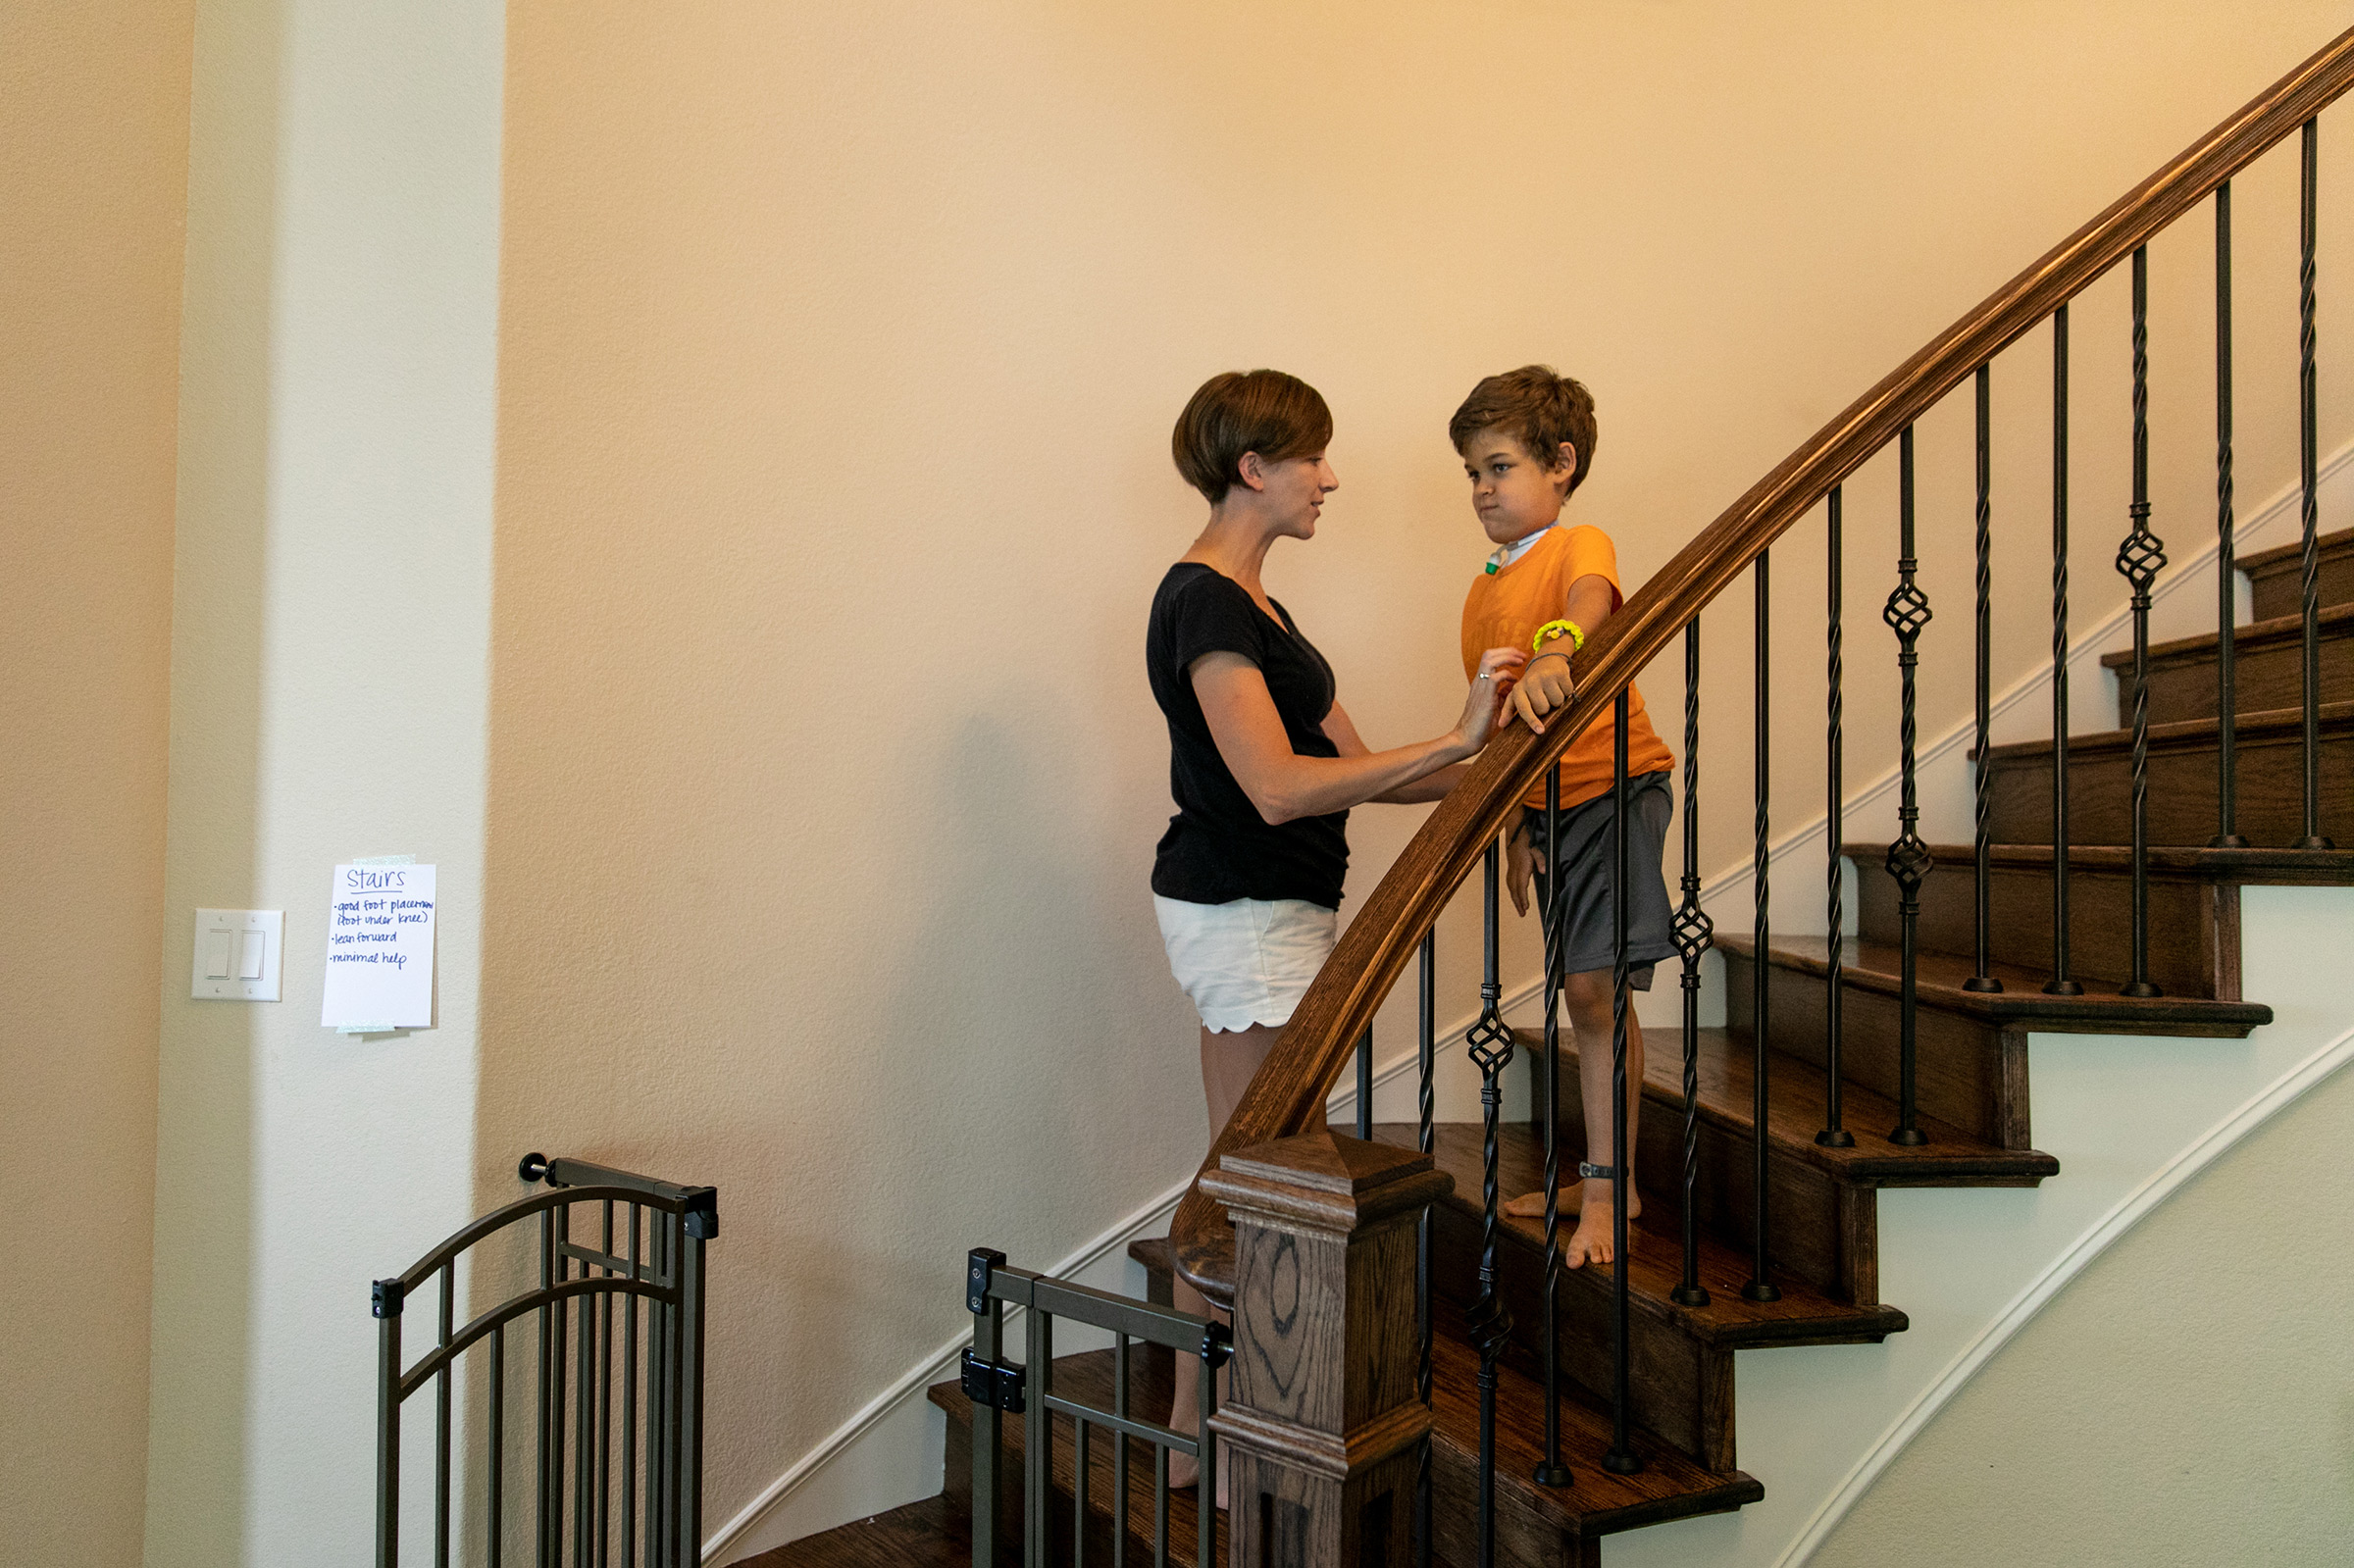 Rachel Scott helps her son Braden walk down the stairs in their home.